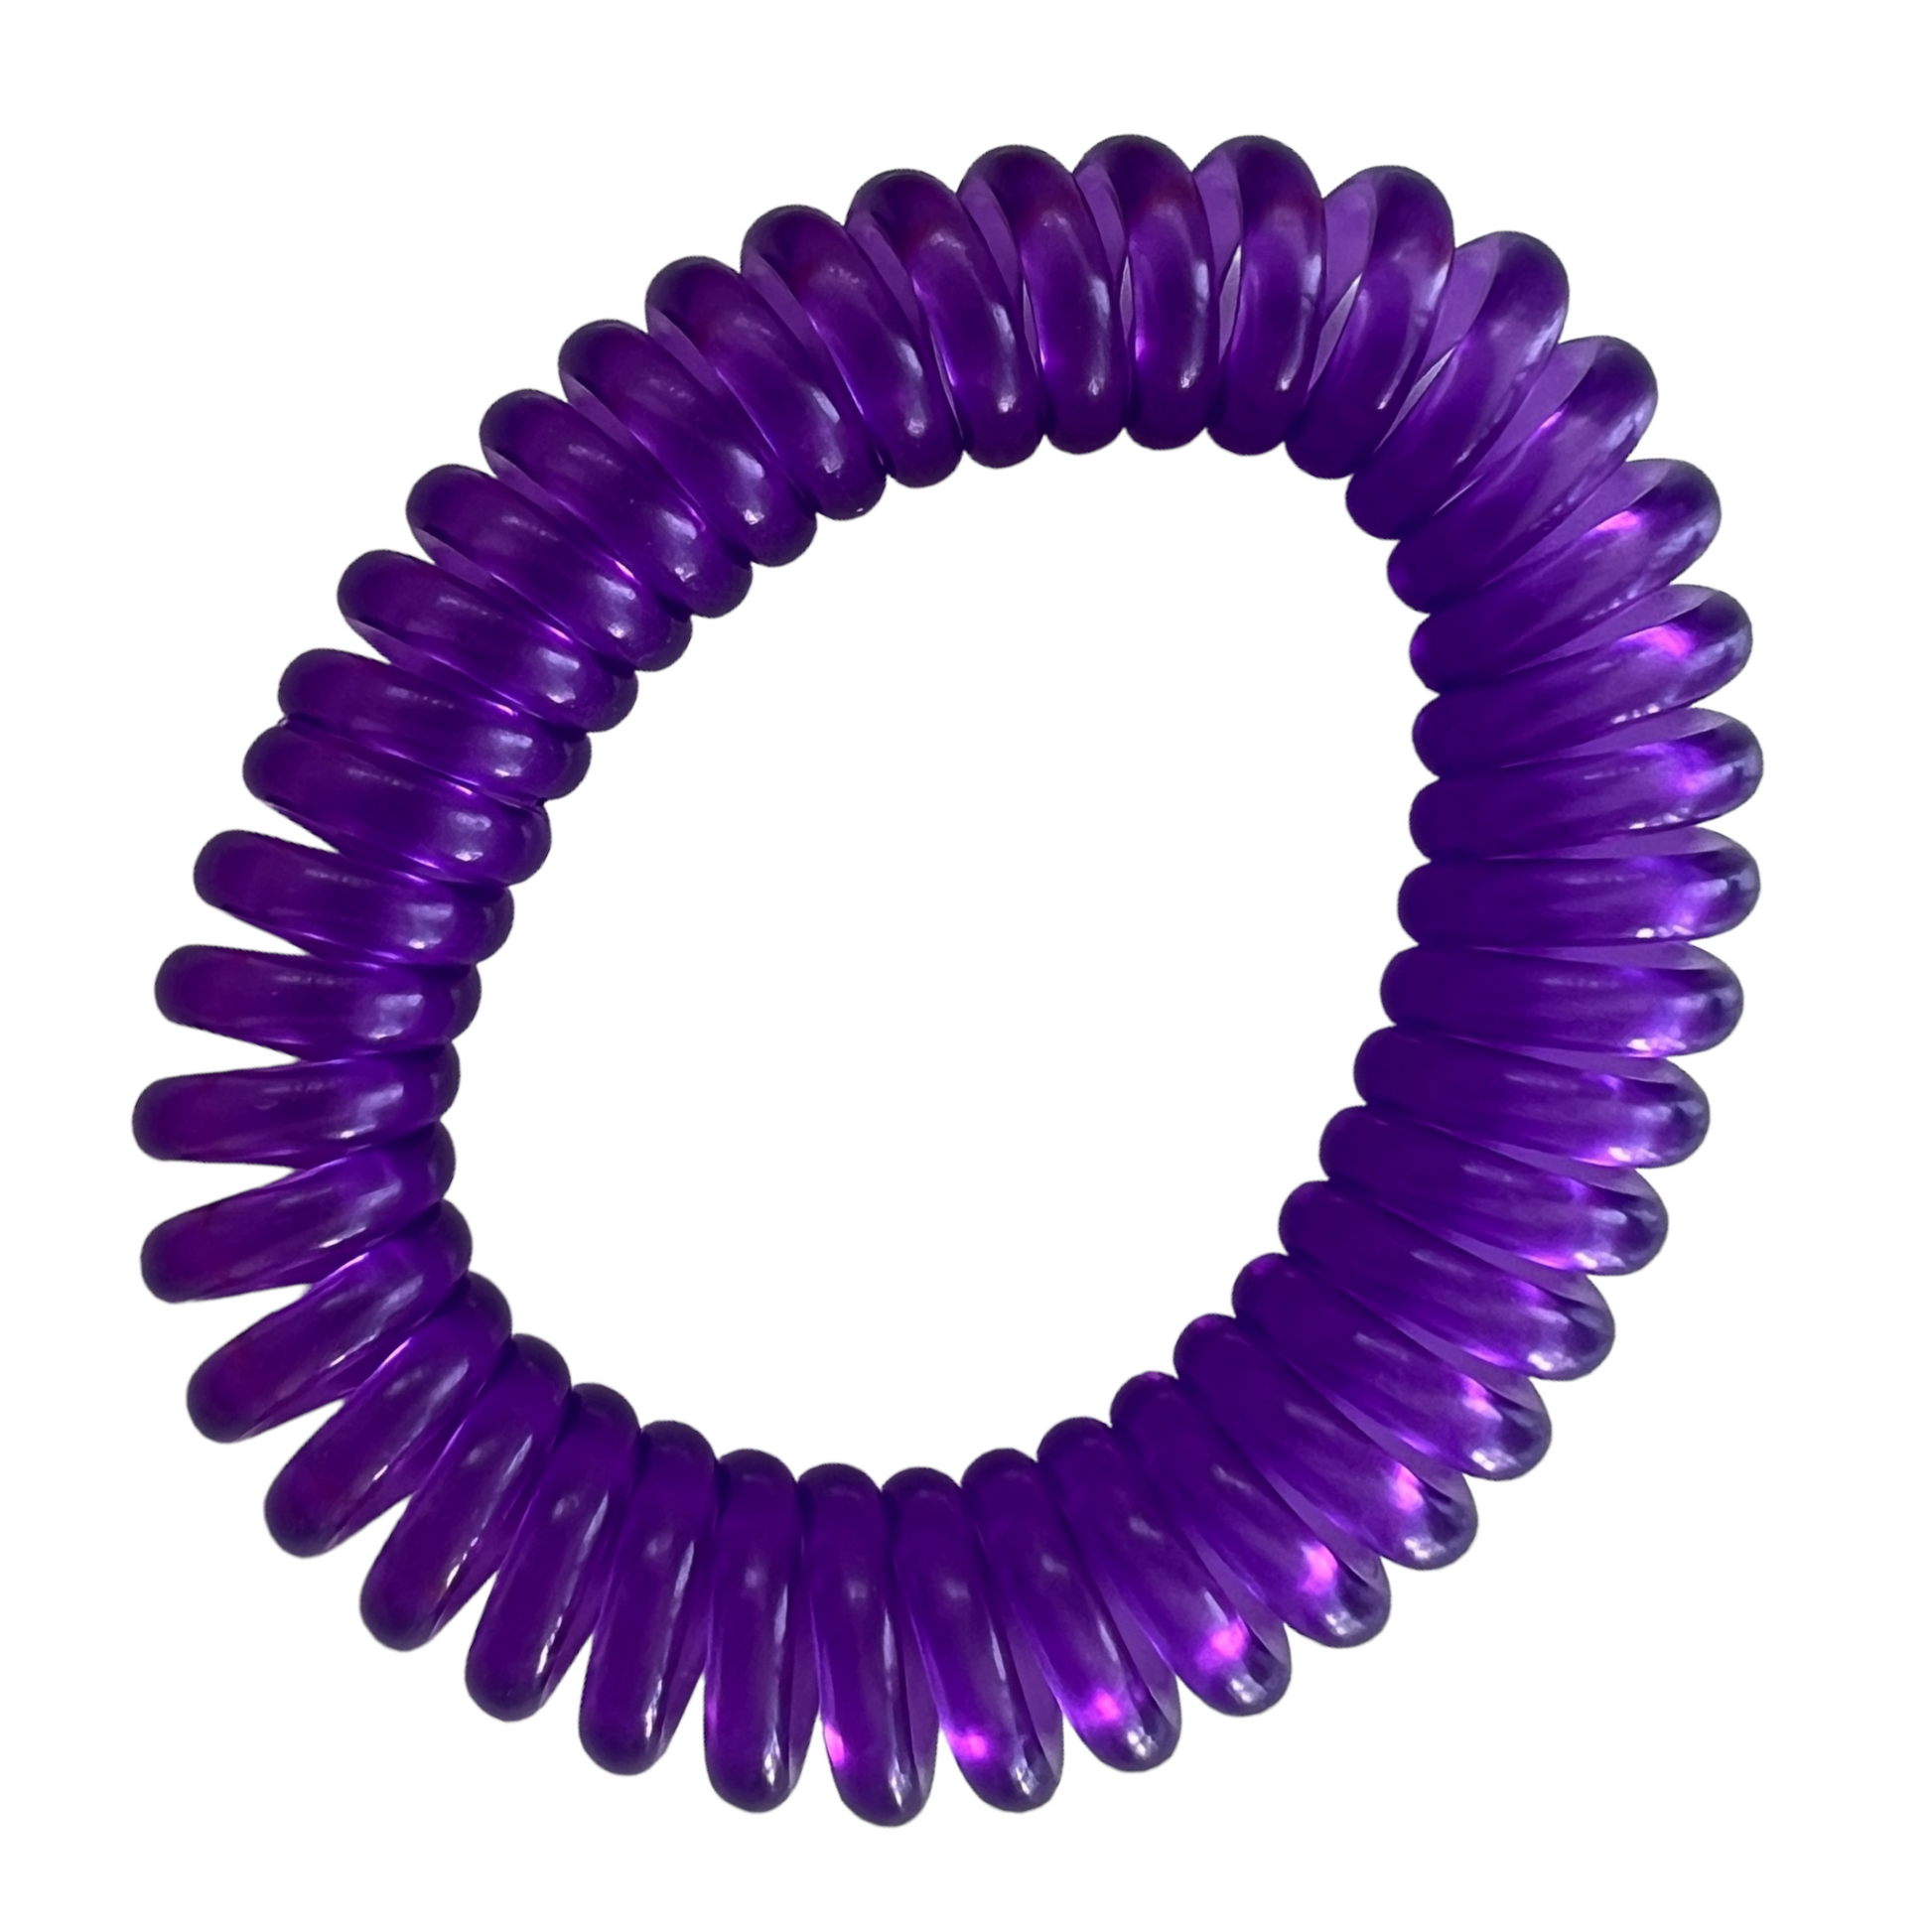 Natural Safe Mosquito Repellent Bracelets  SPIRIT SPARKPLUGS Transparent Purple  